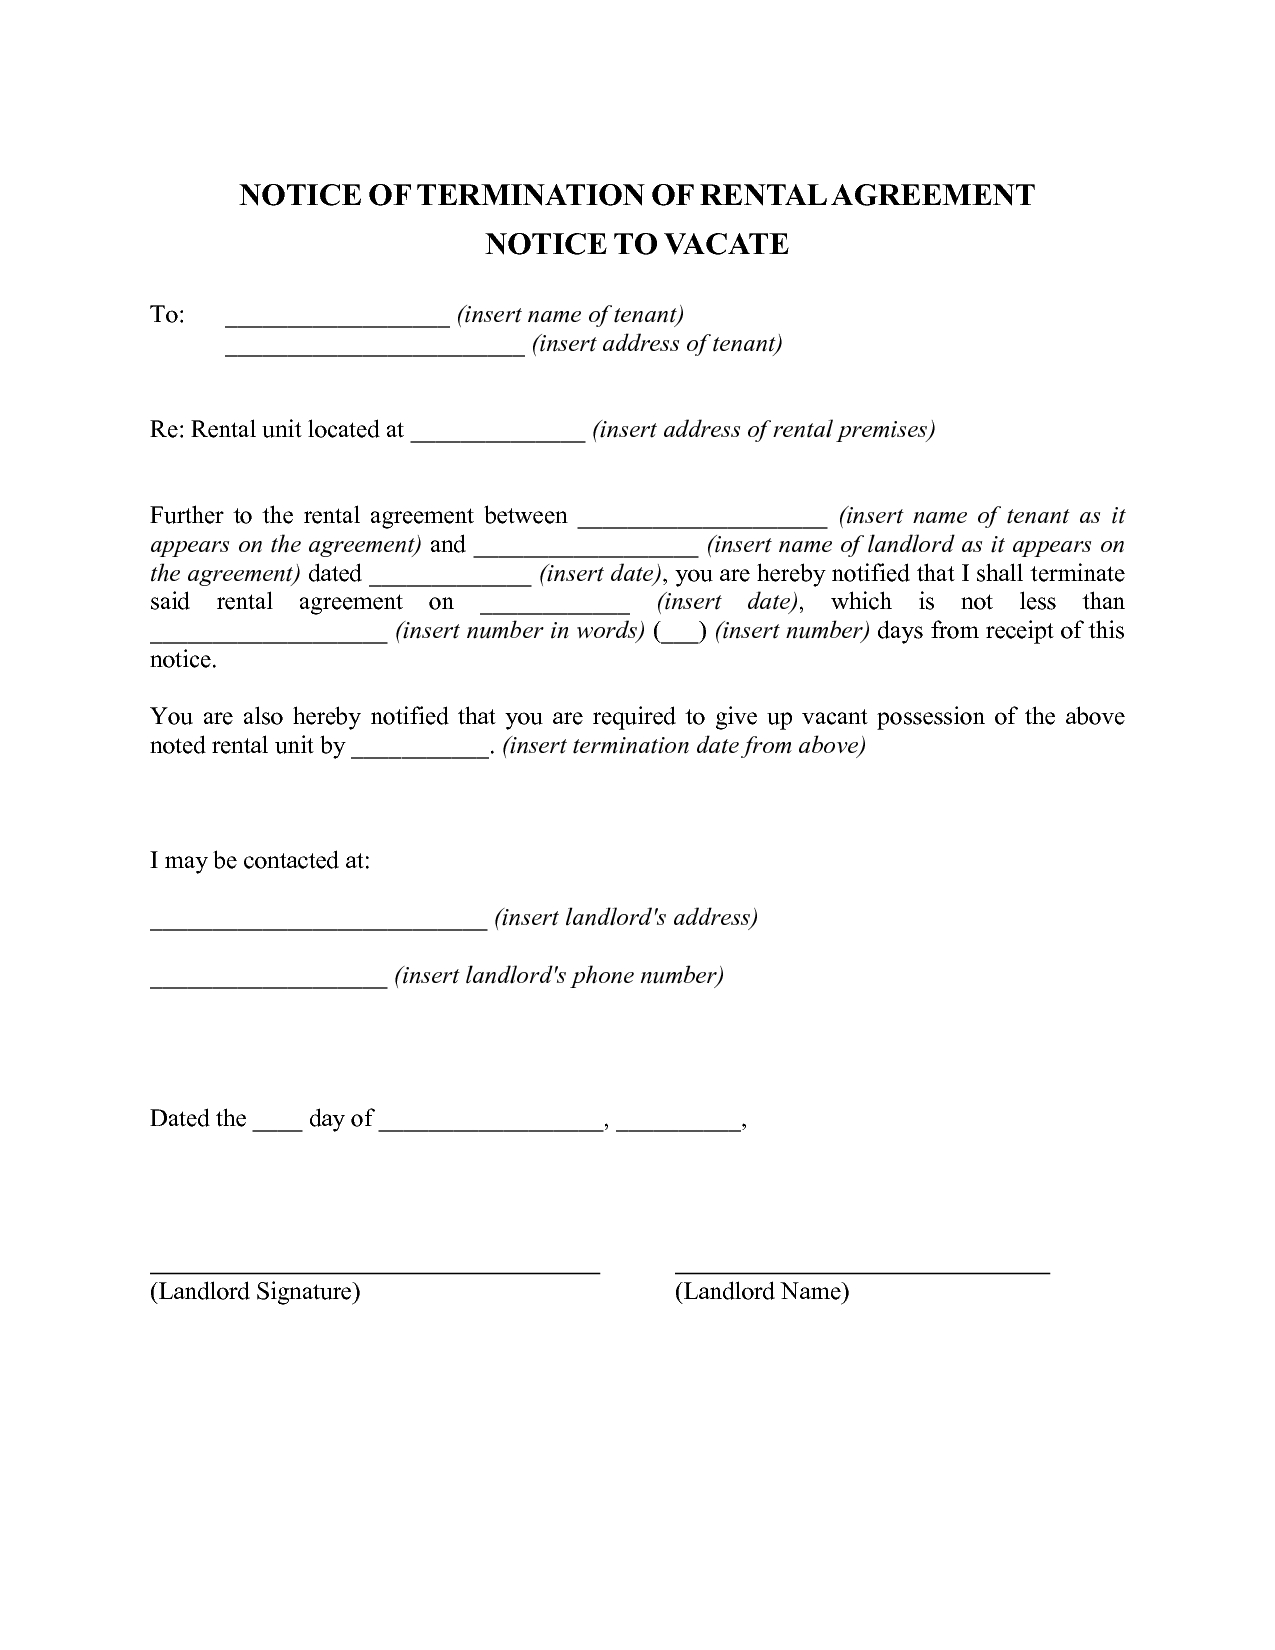 Landlord Notice Letter to Tenant Template - Tenancy Resignation Letter Letter format formal Sample